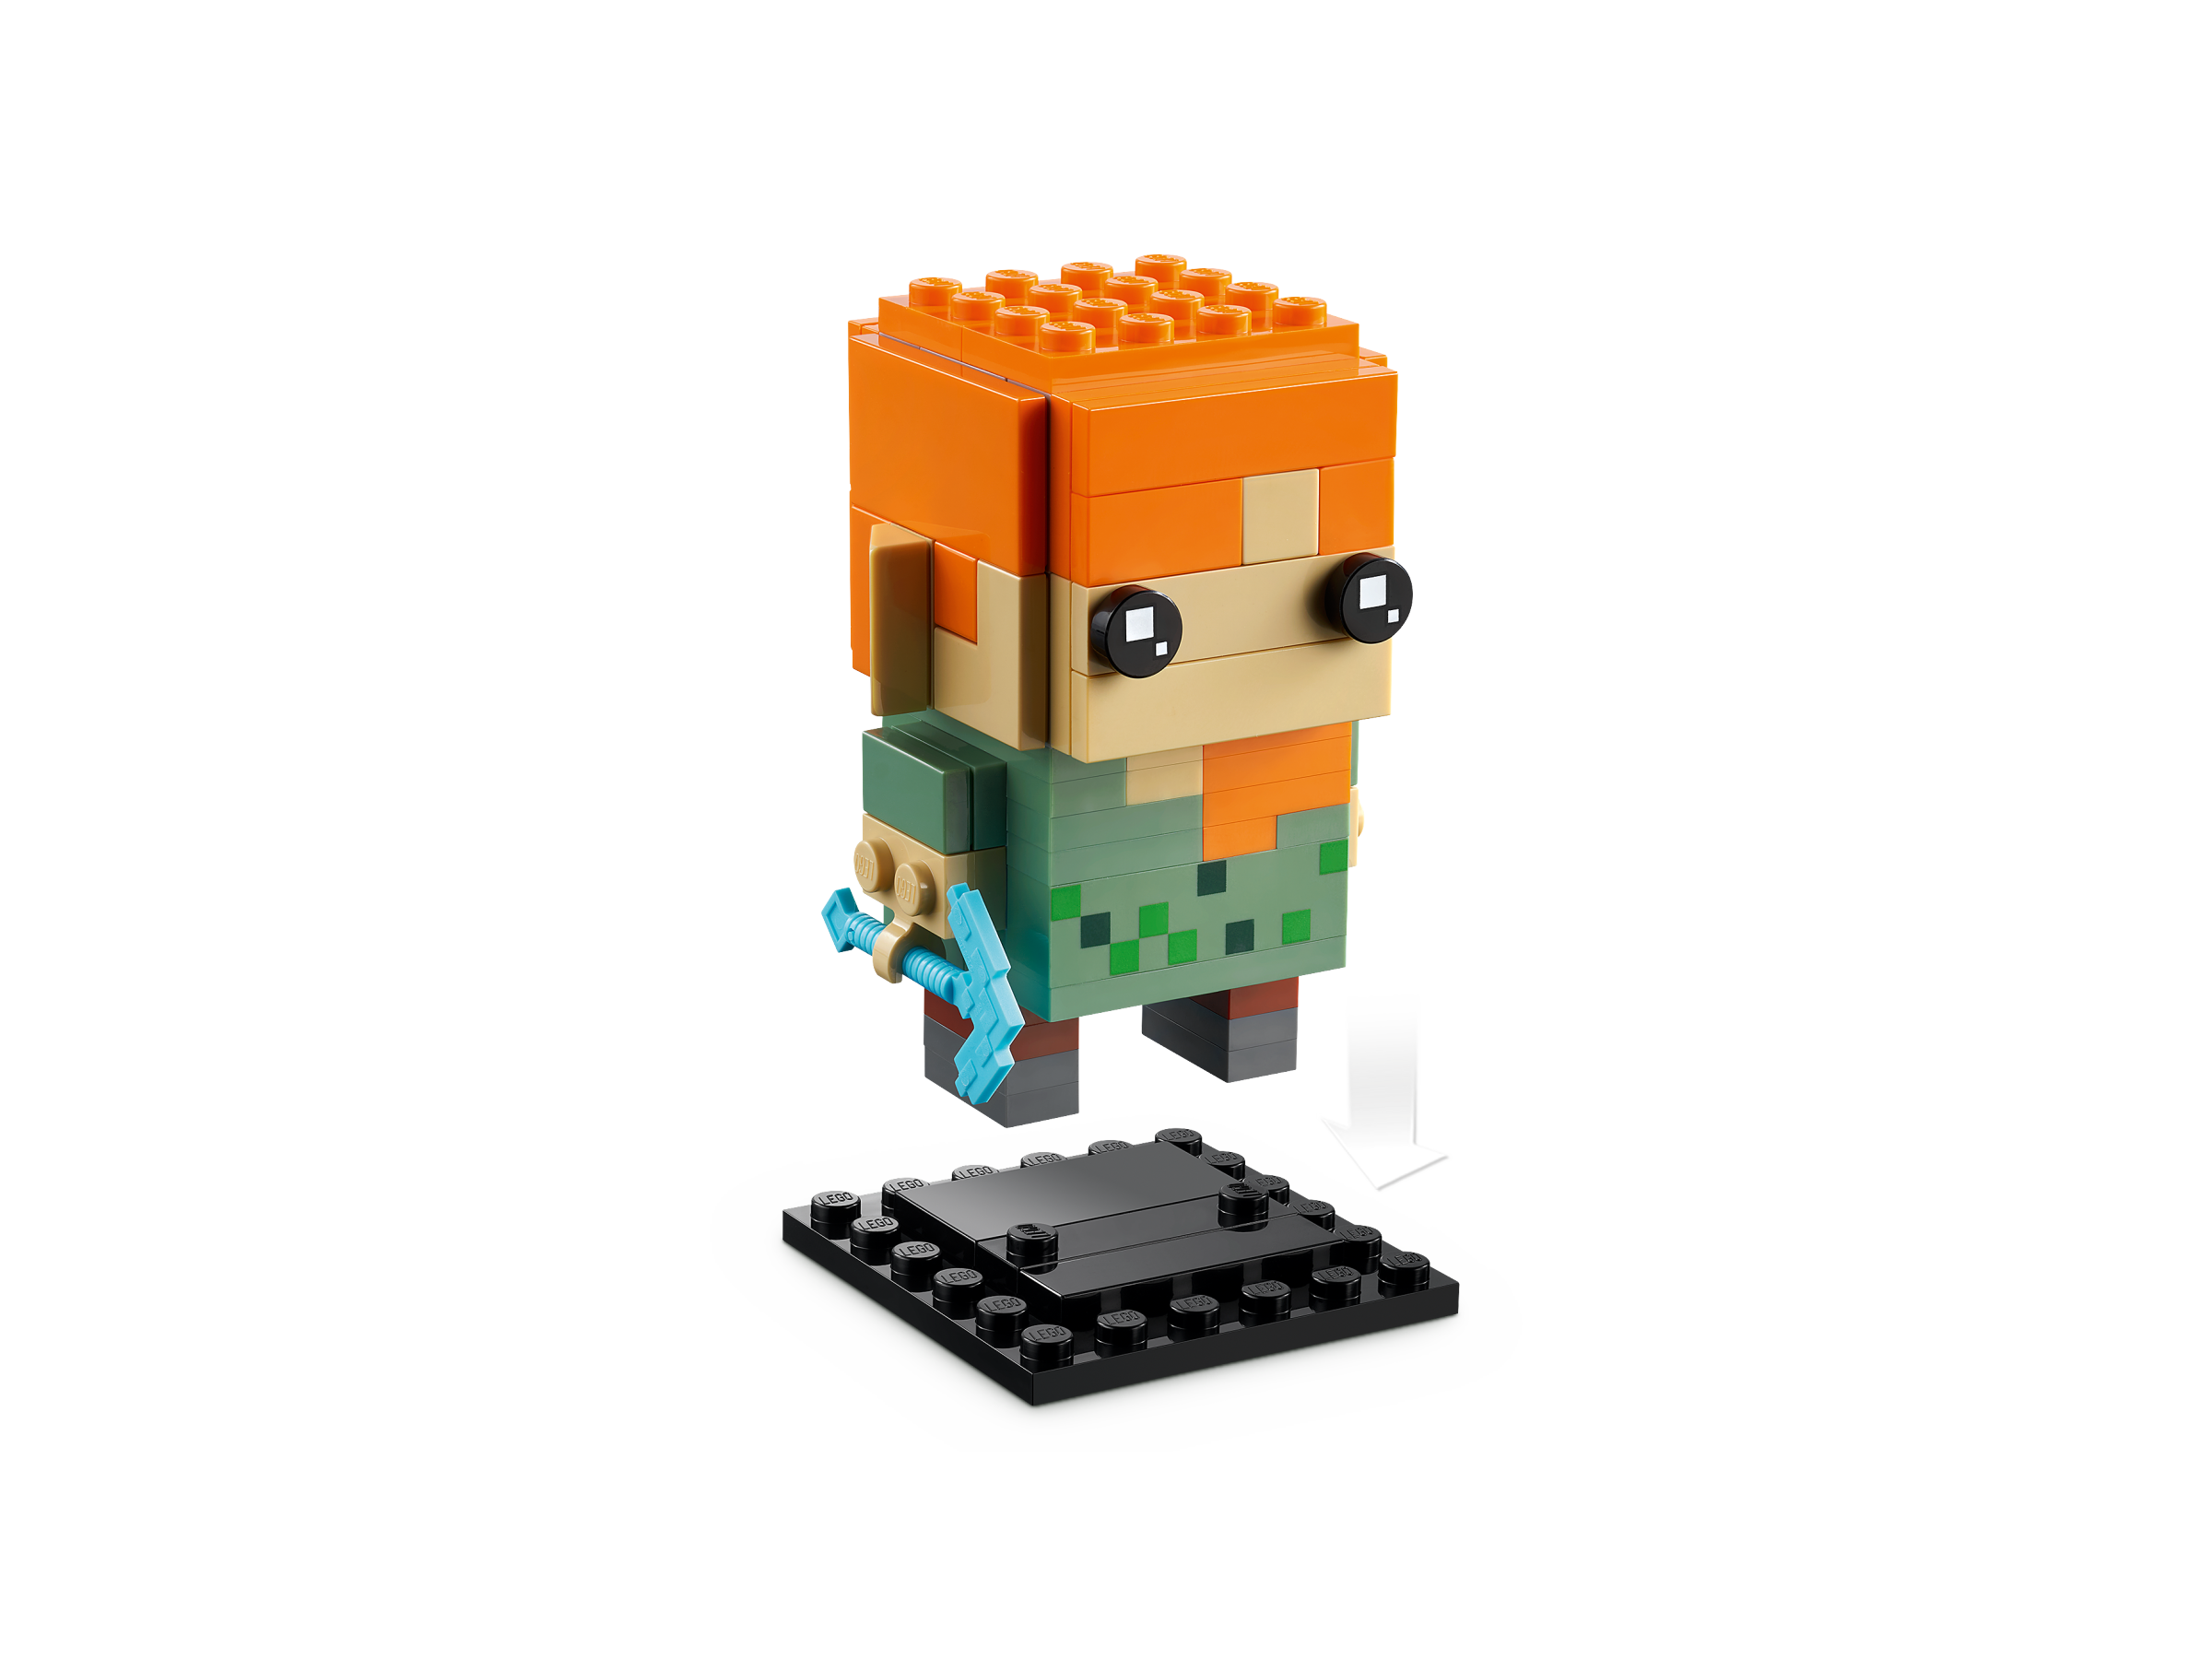  LEGO BrickHeadz Minecraft 40624 - Alex